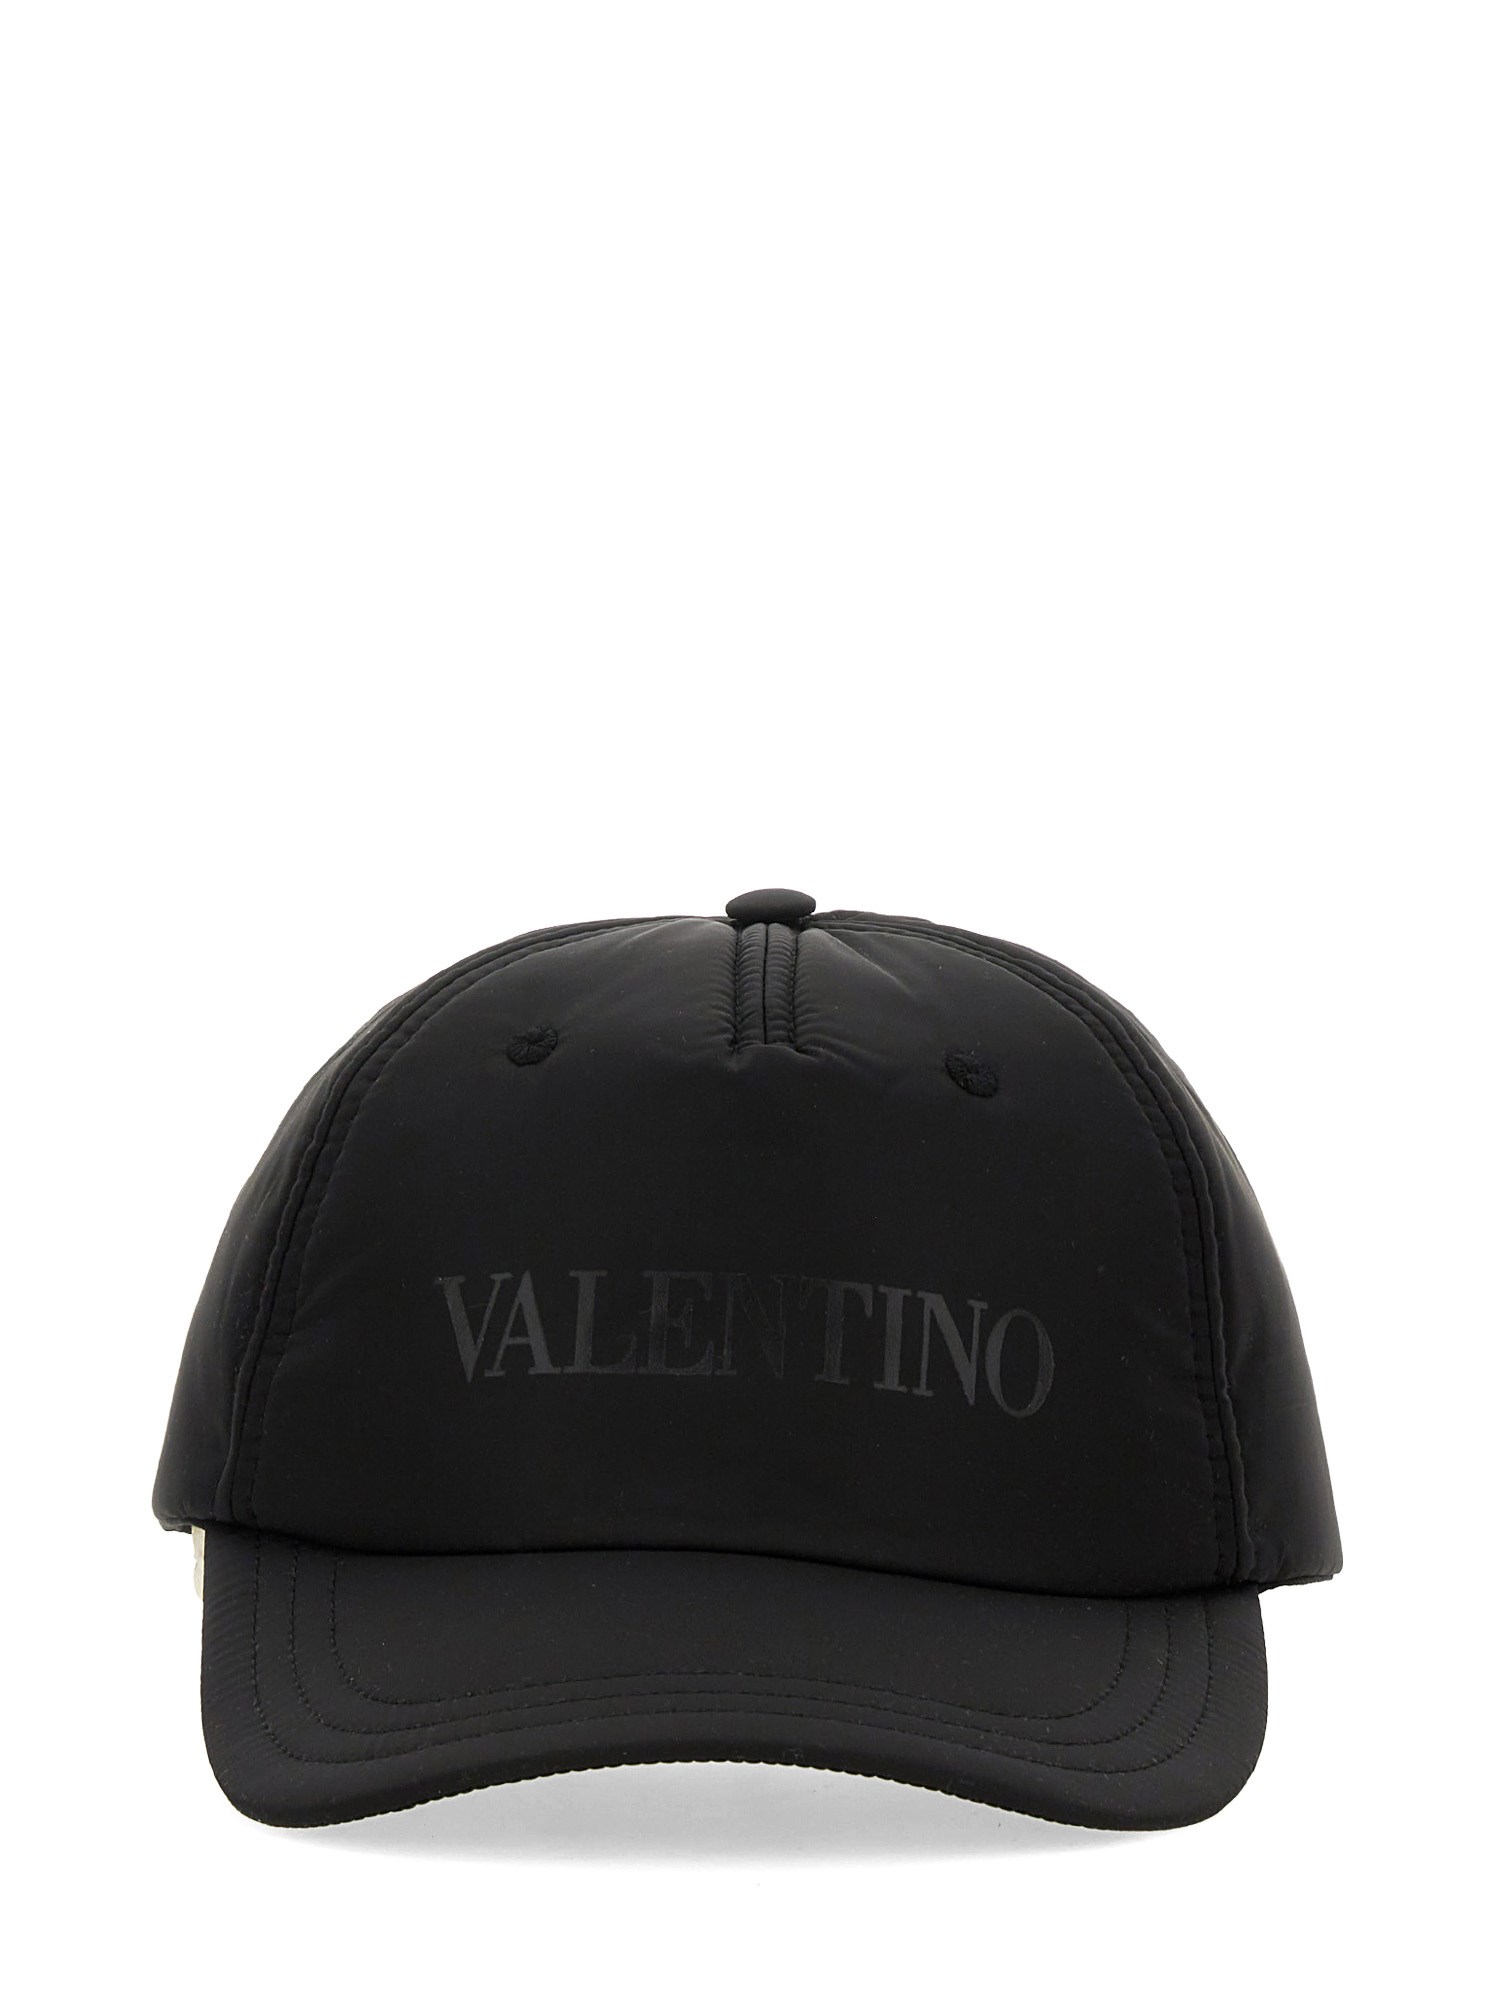 valentino garavani hat with logo